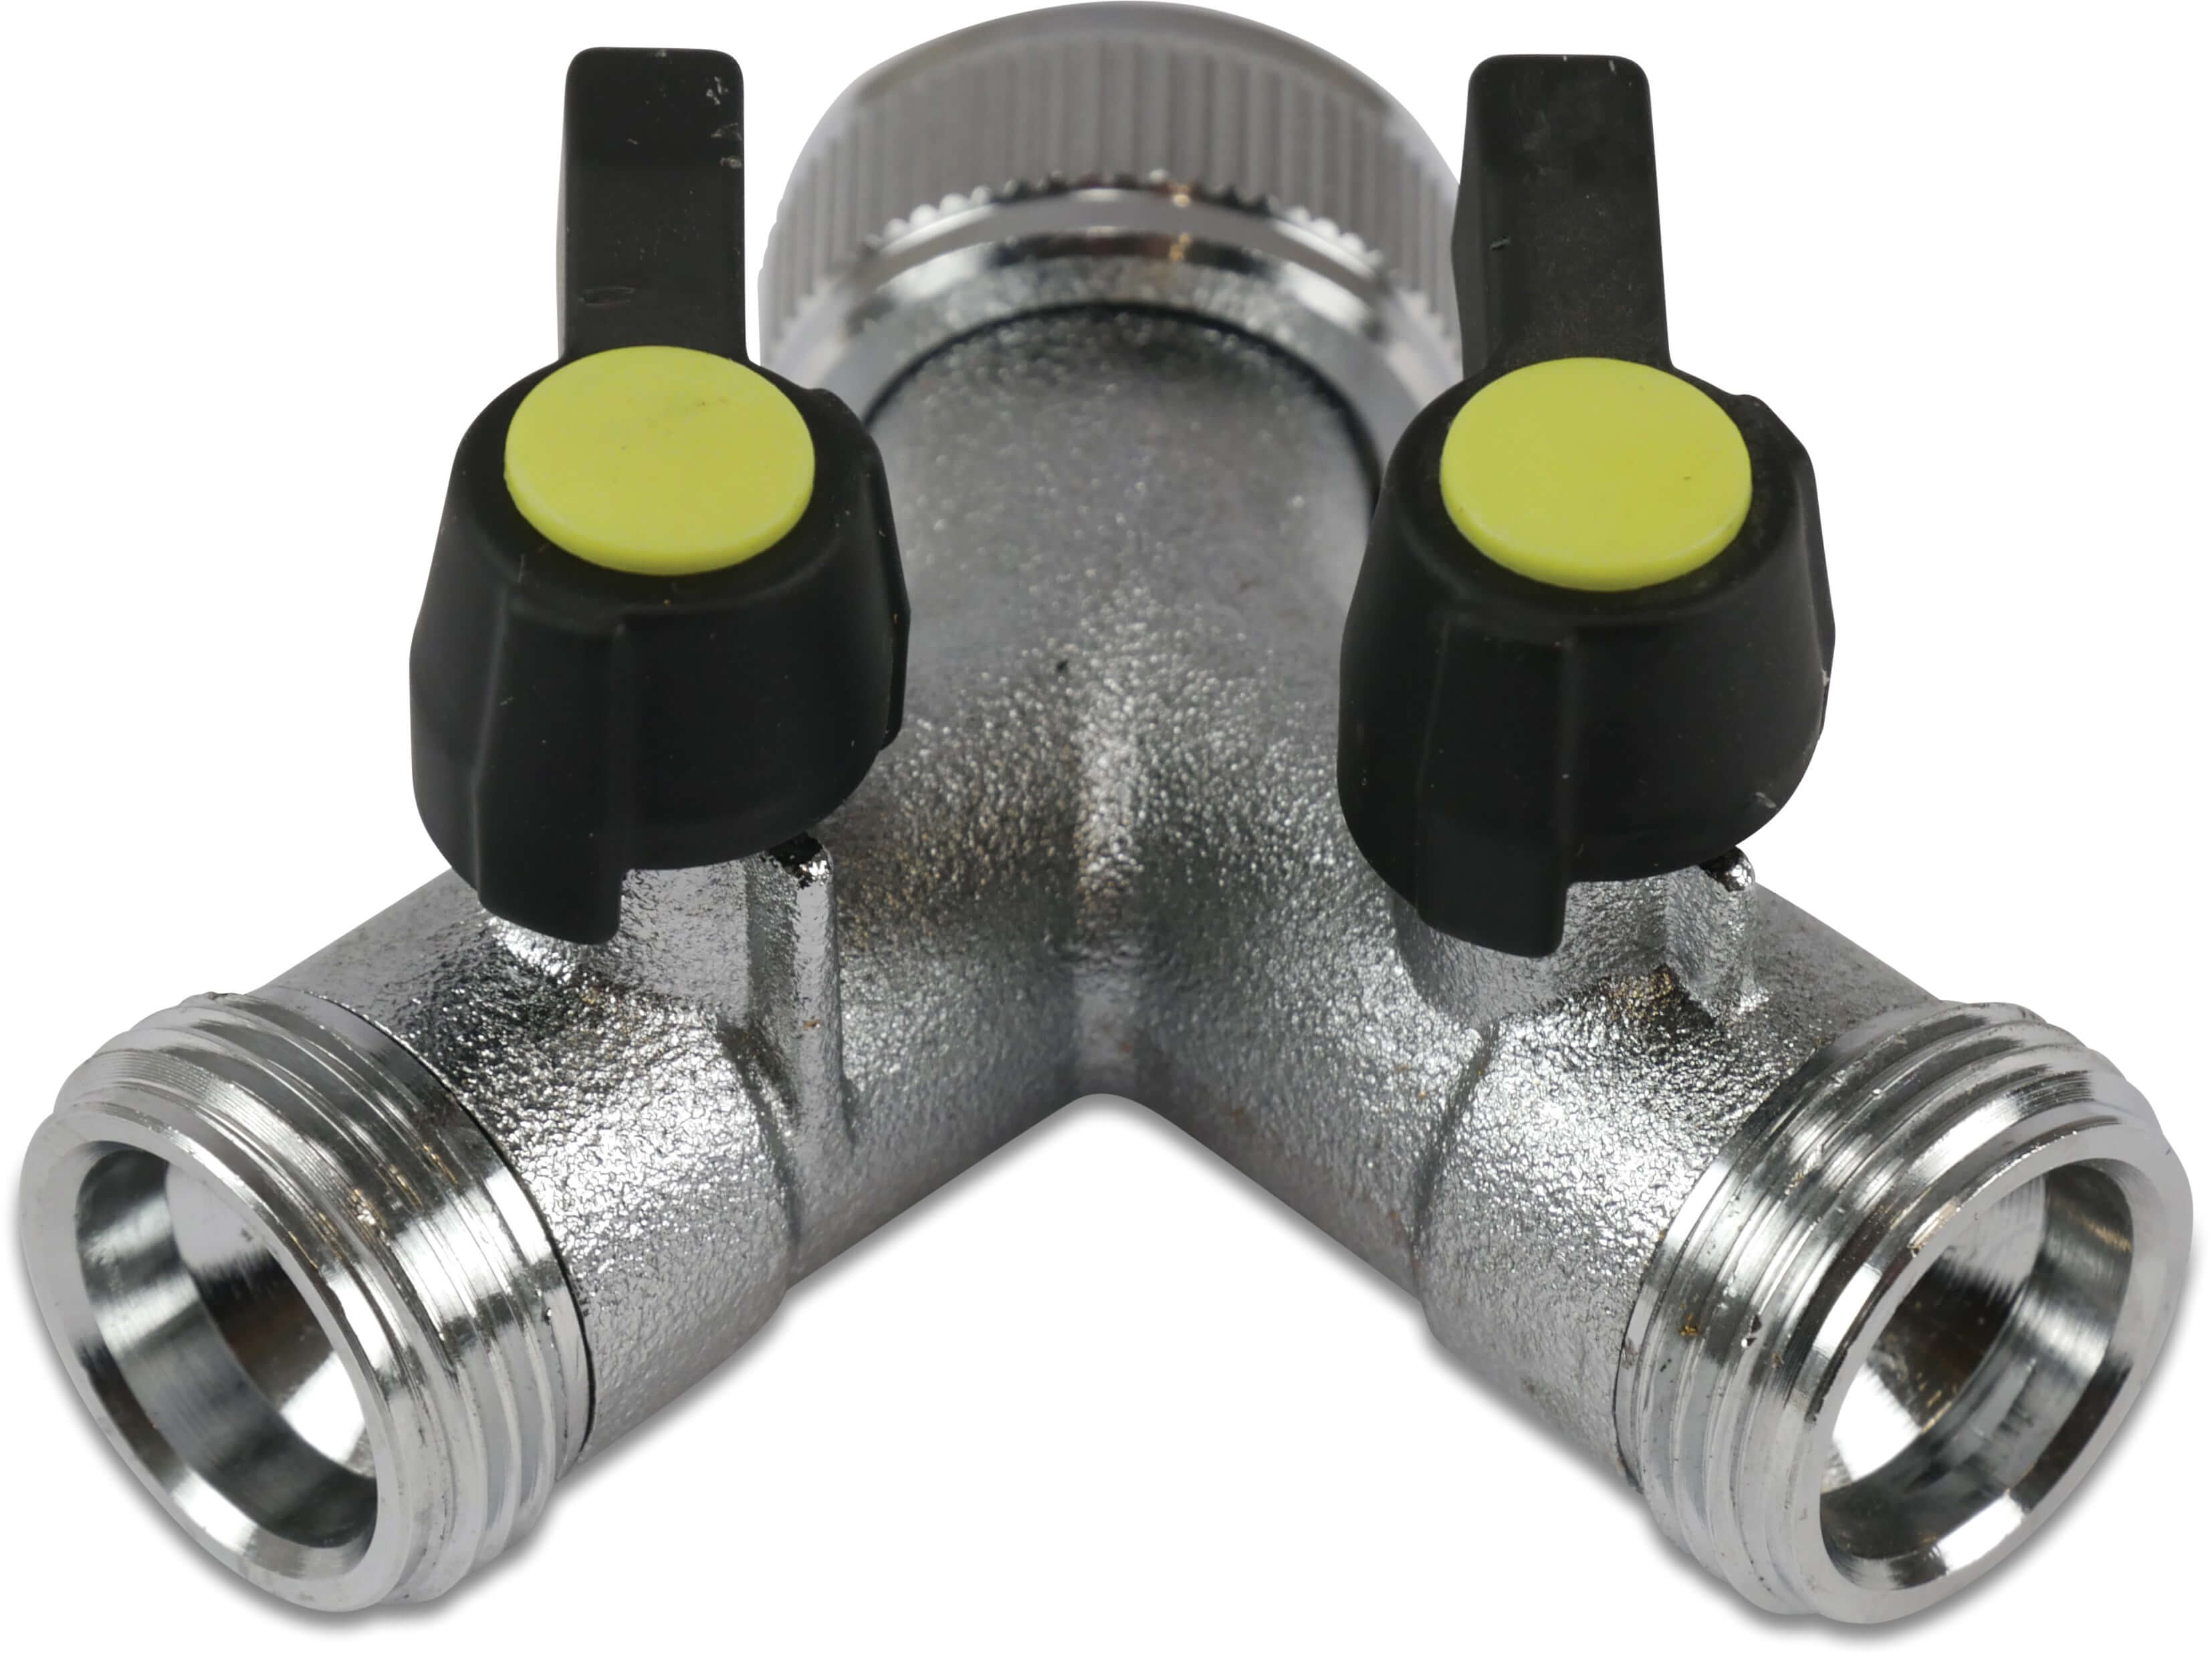 Hydro-S 3-way valve chrome-plated brass 3/4" female threaded nut x male thread x male thread type with ball valve